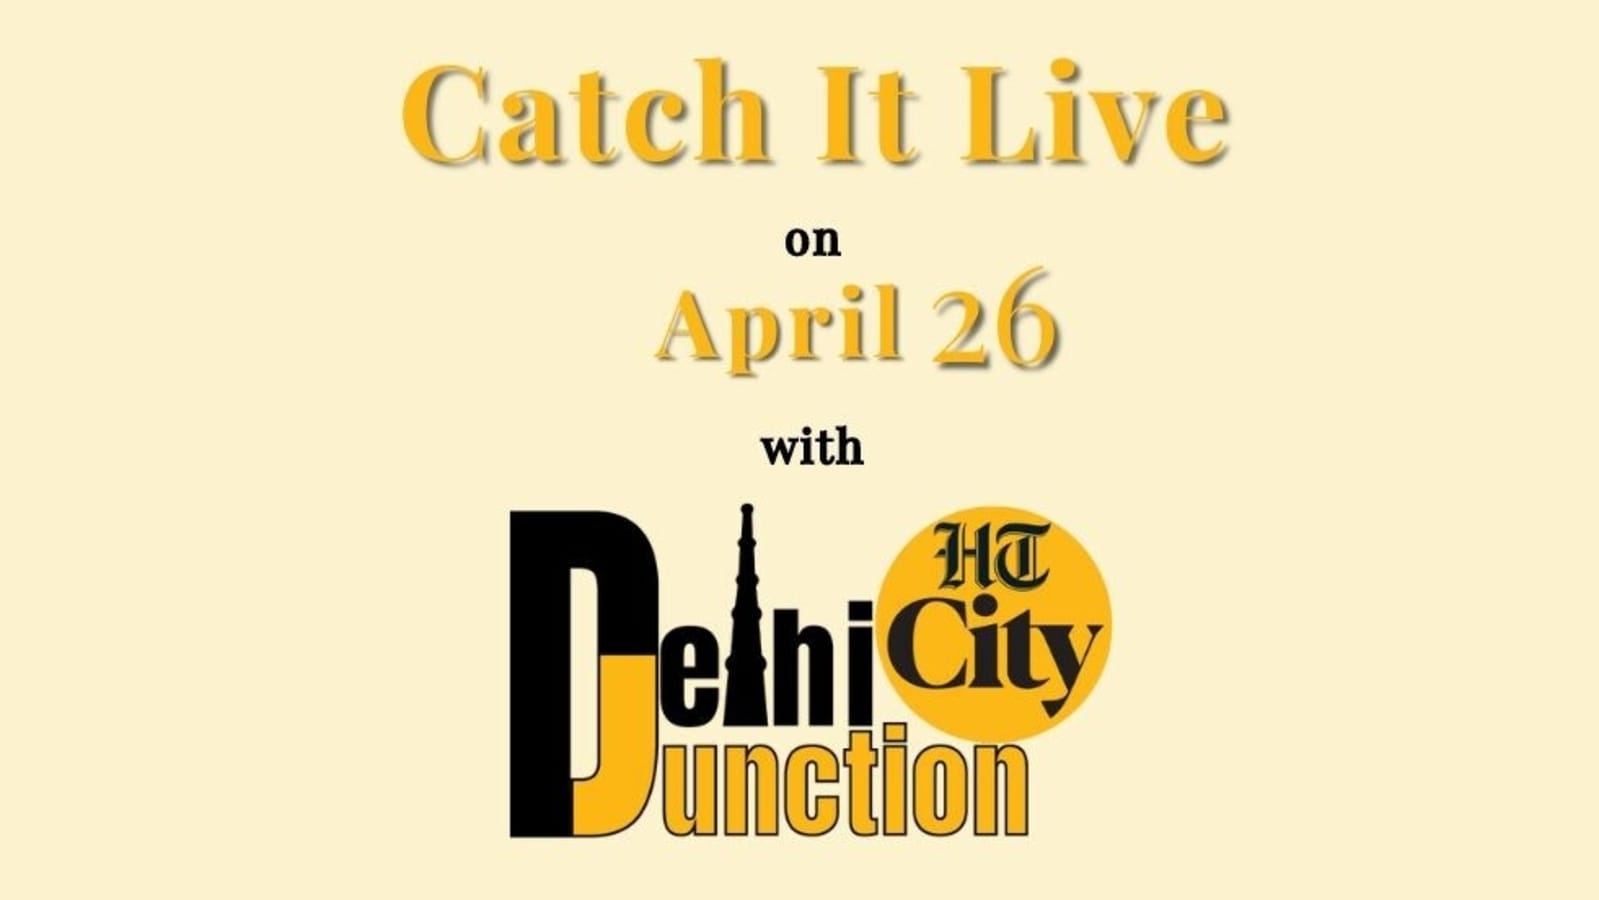 एचटी सिटी दिल्ली जंक्शन: 26 अप्रैल को कैच इट लाइव